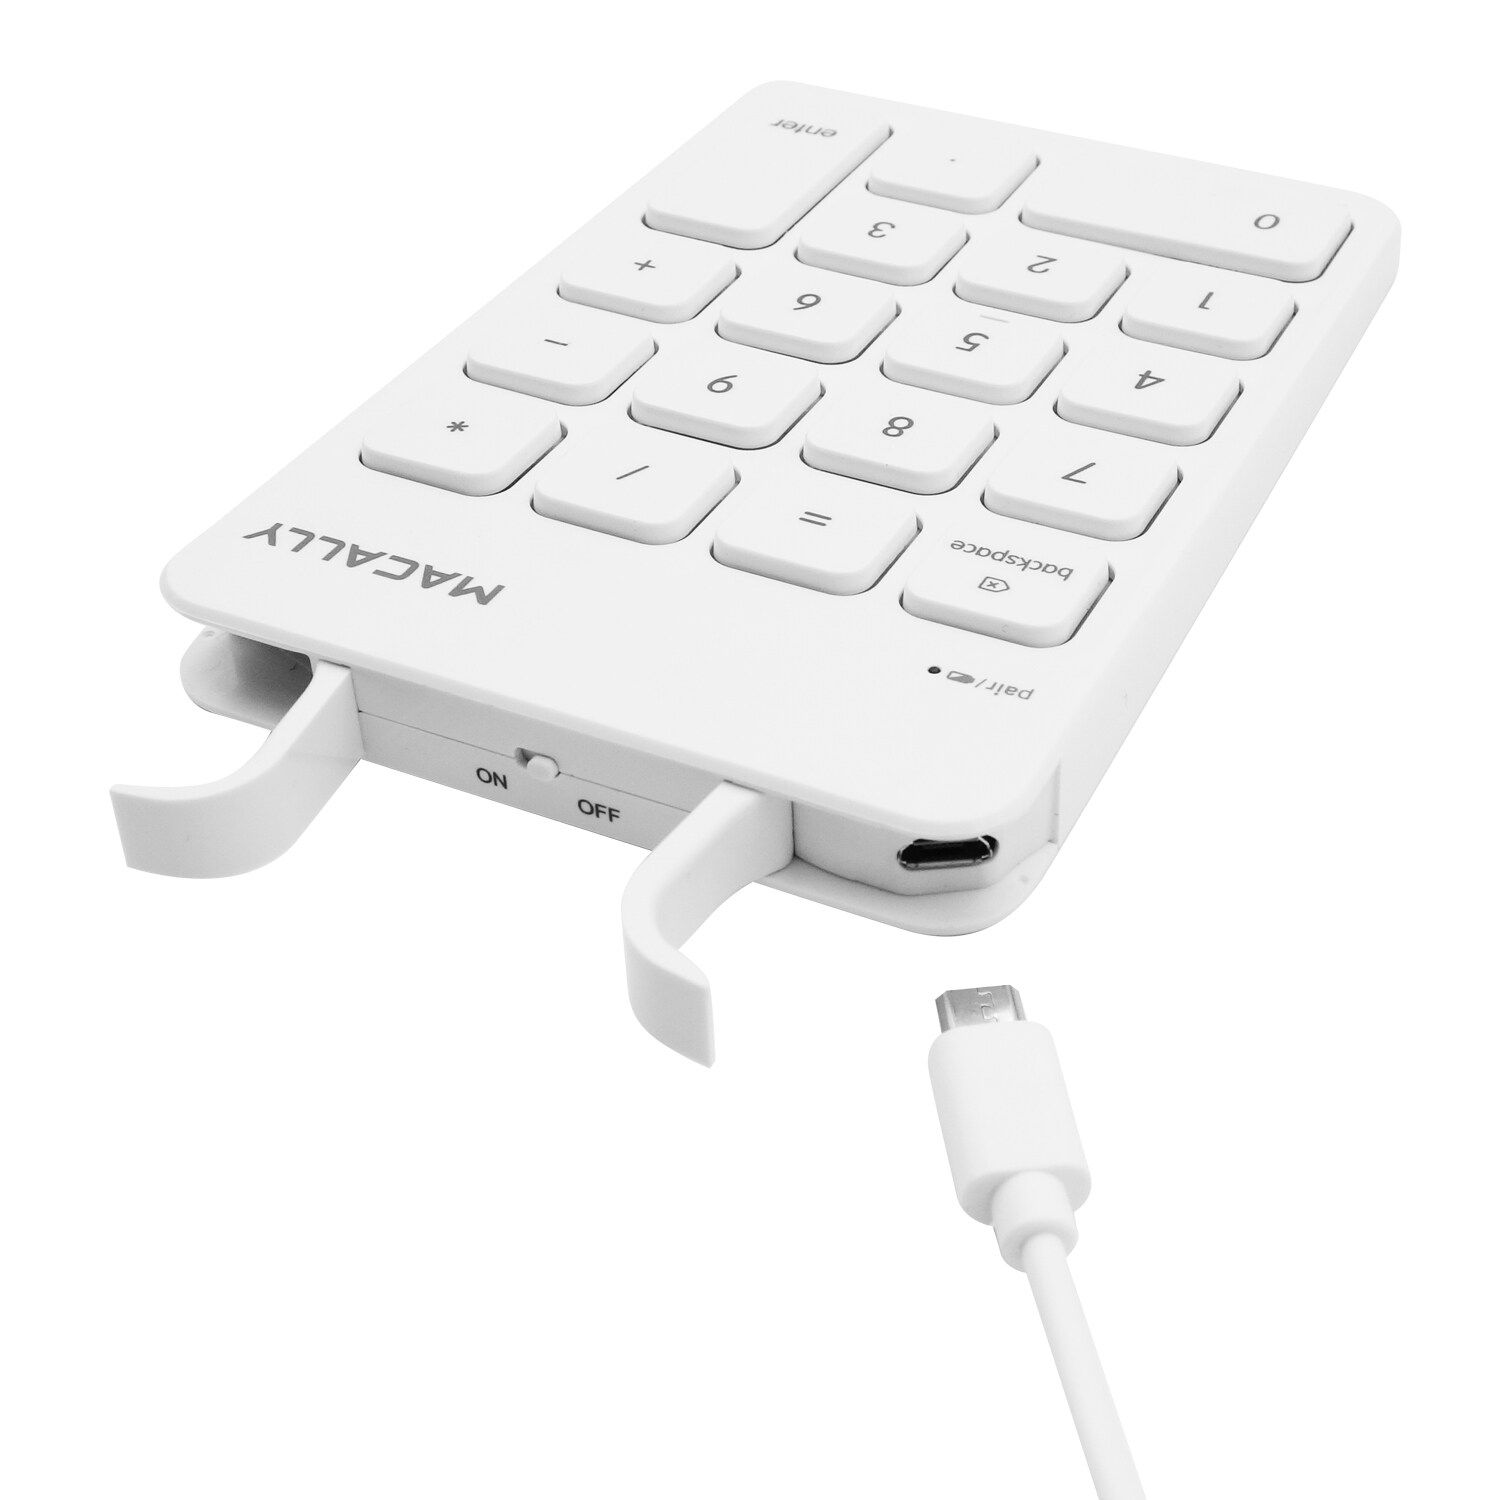 apple keyboard with numeric keypad amazon